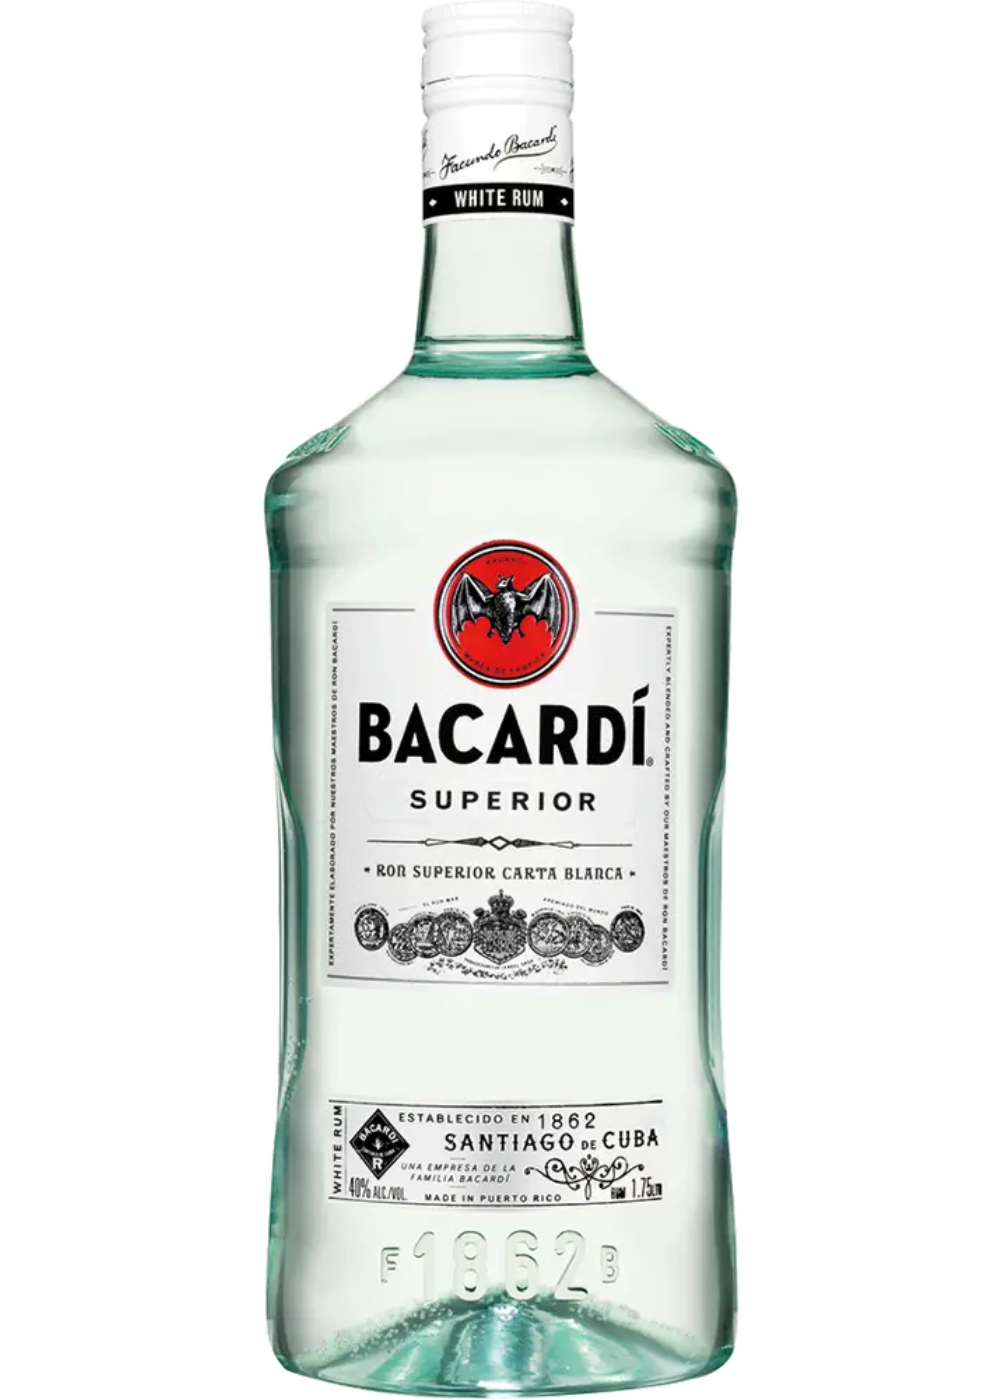 Ром бакарди литр. Бакарди Ром Superior 1 литр. Белый Ром бакарди Супериор. Bacardi Superior Black rum Ром 1862. Bacardi 1862.